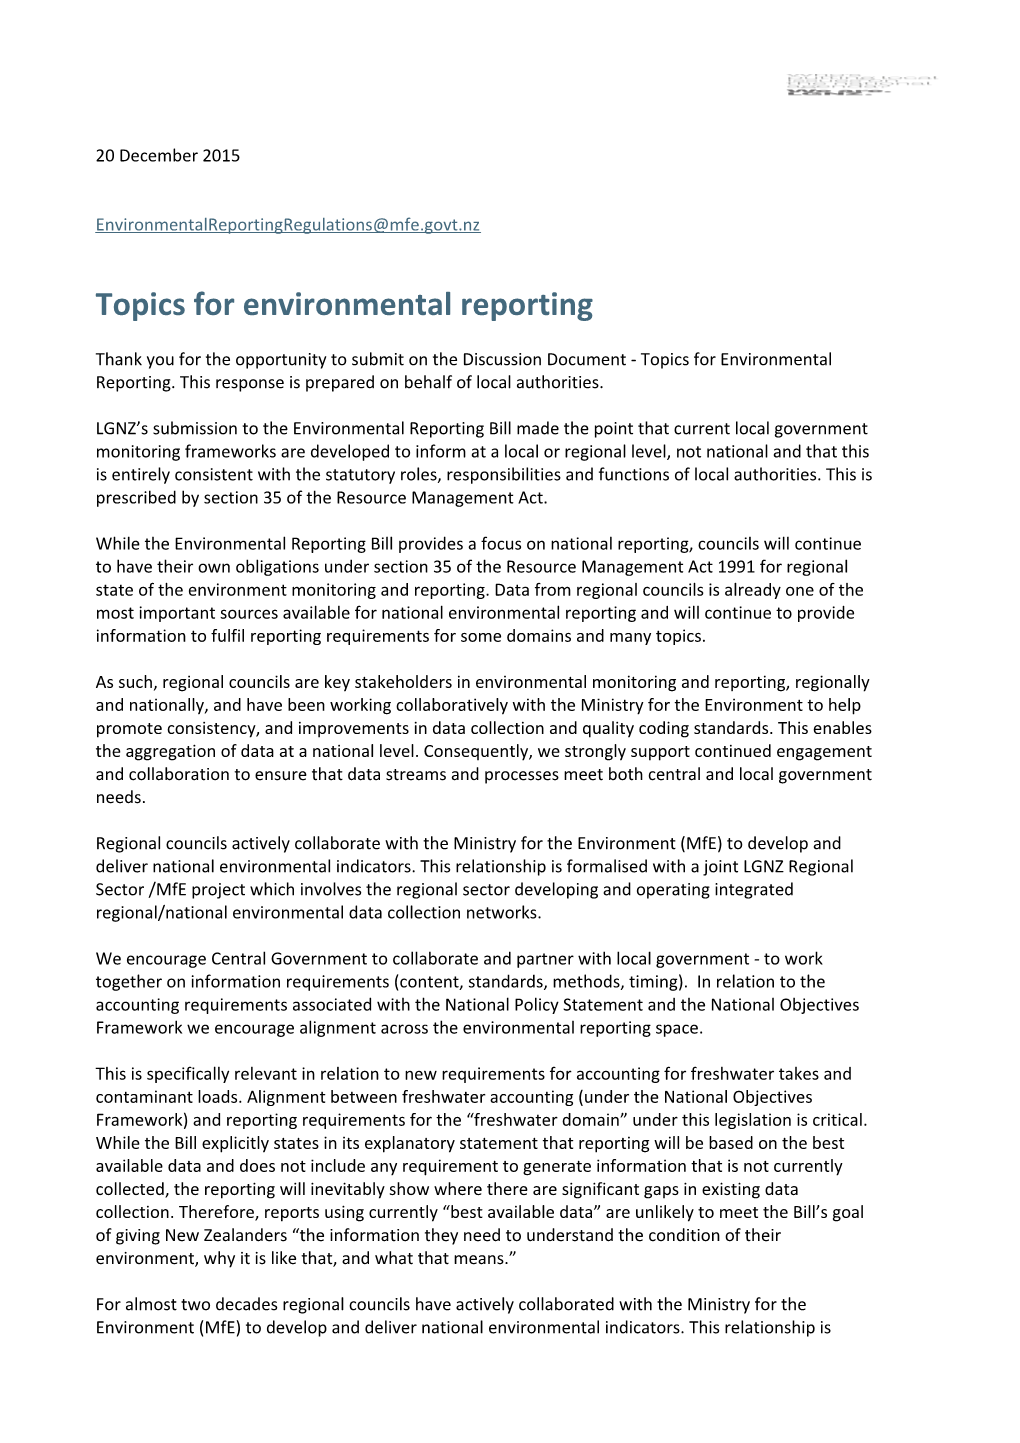 Topics for Environmental Reporting